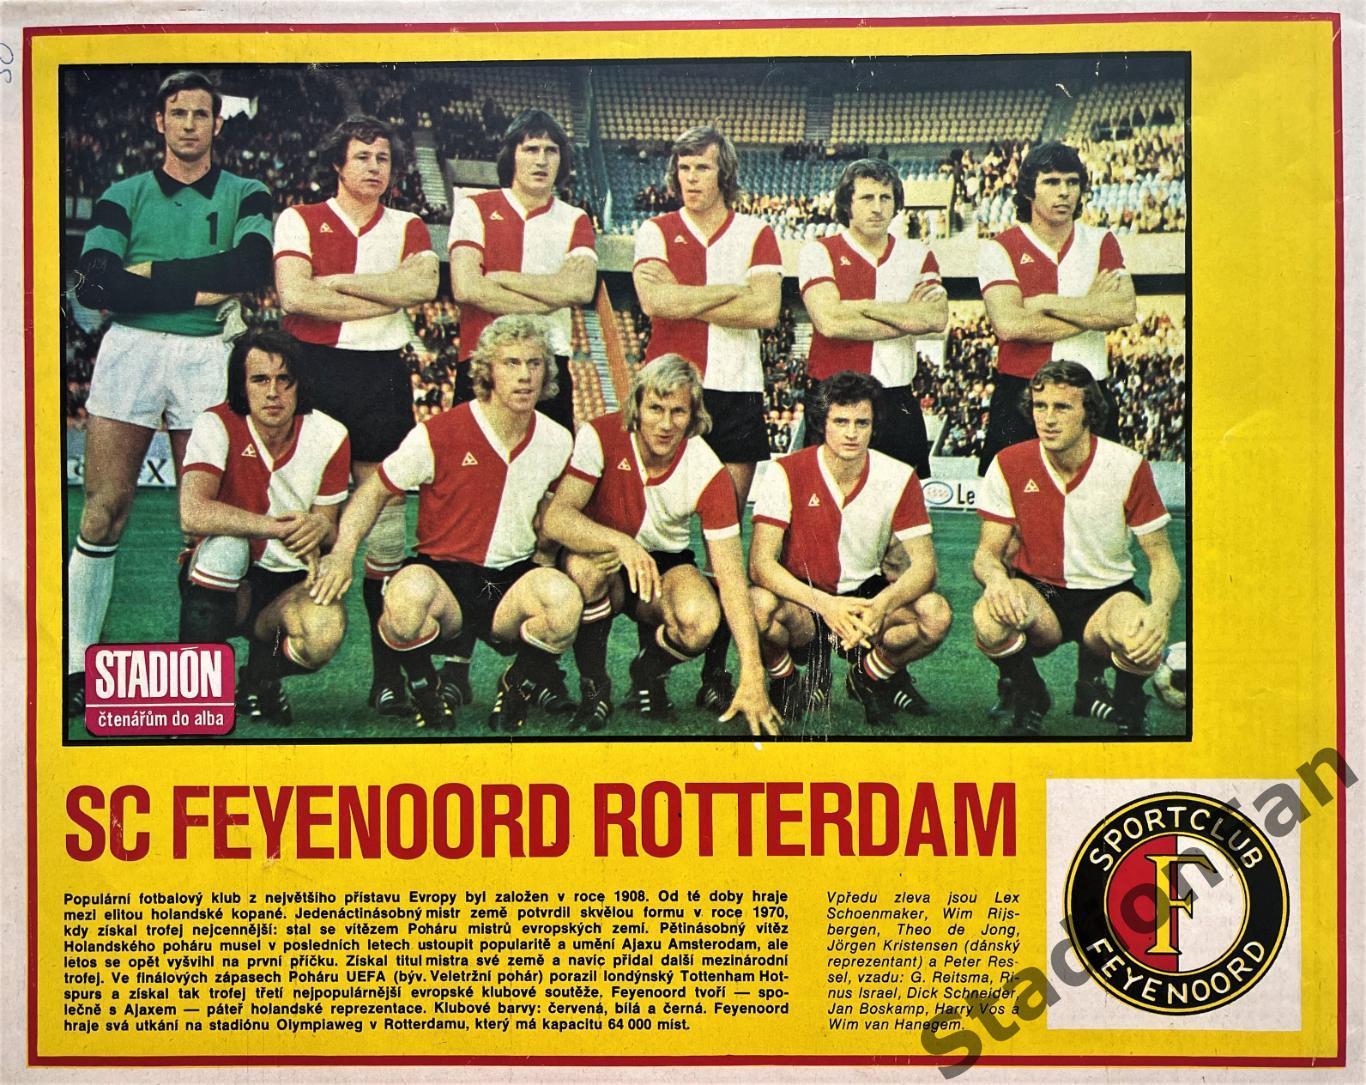 Постер из журнала Стадион (Stadion) - Feyenoord Rotterdam, 1974.